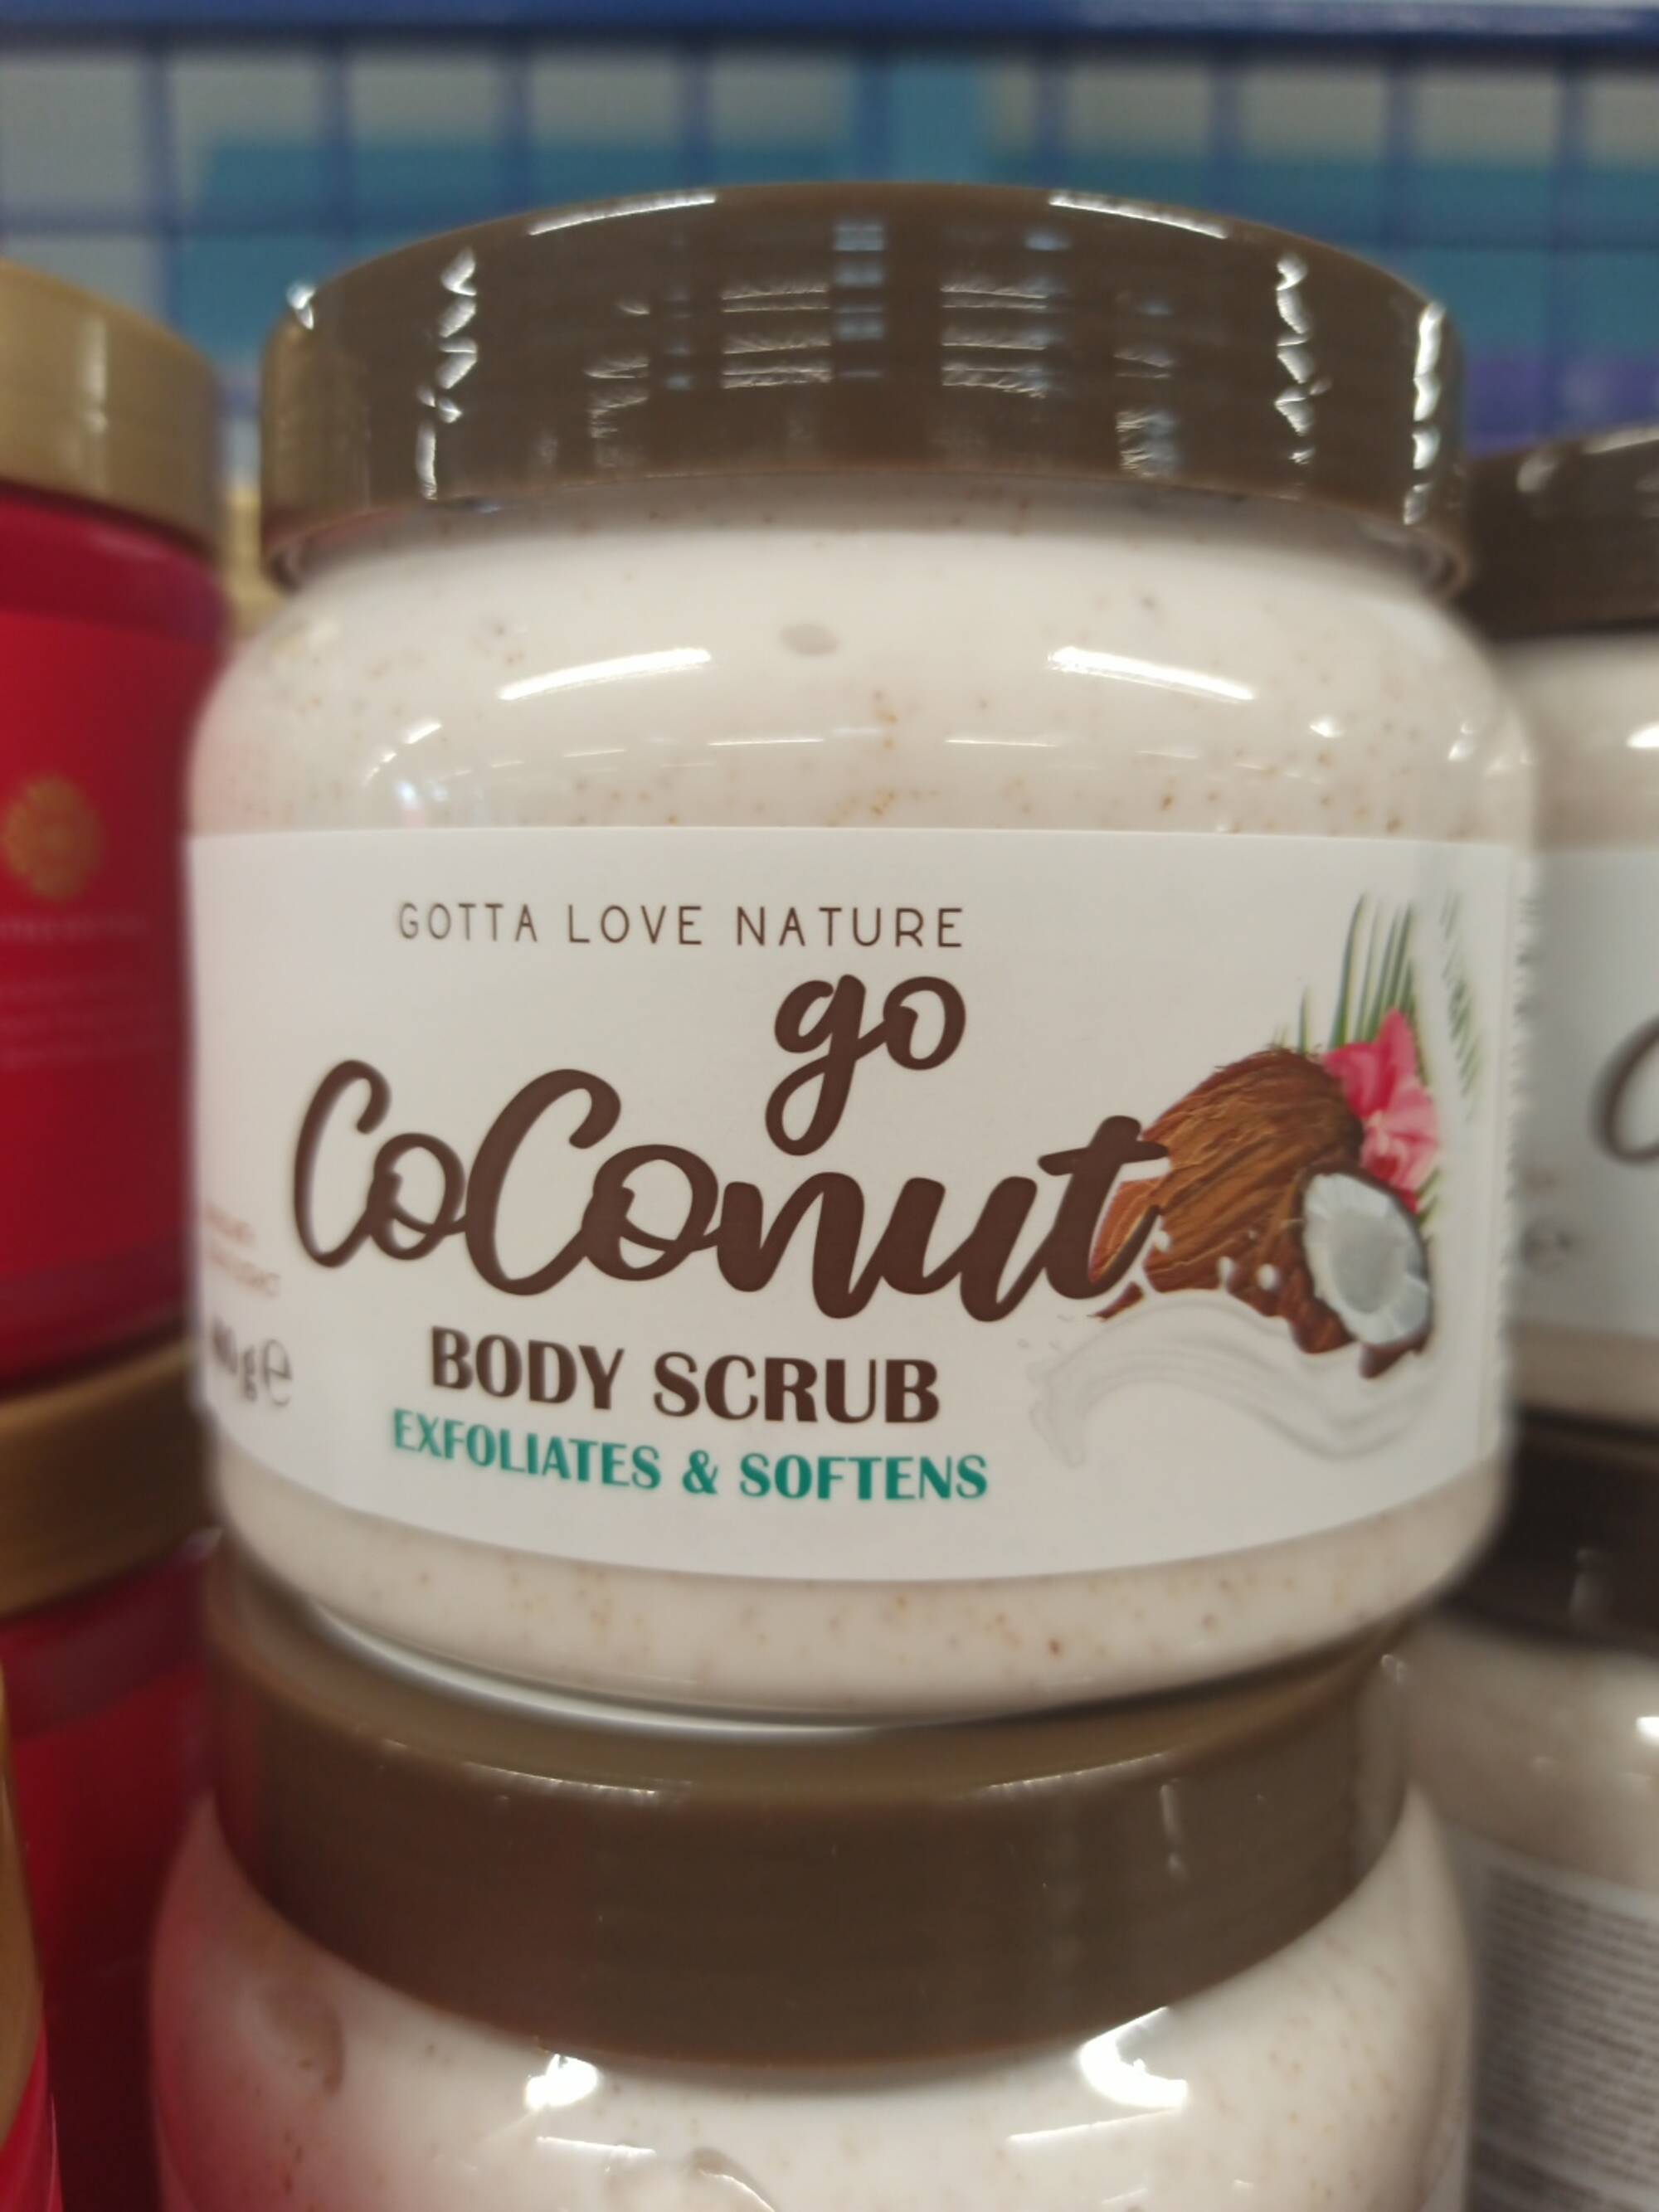 GOTTA LOVE NATURE - Go coconut - Body scrub